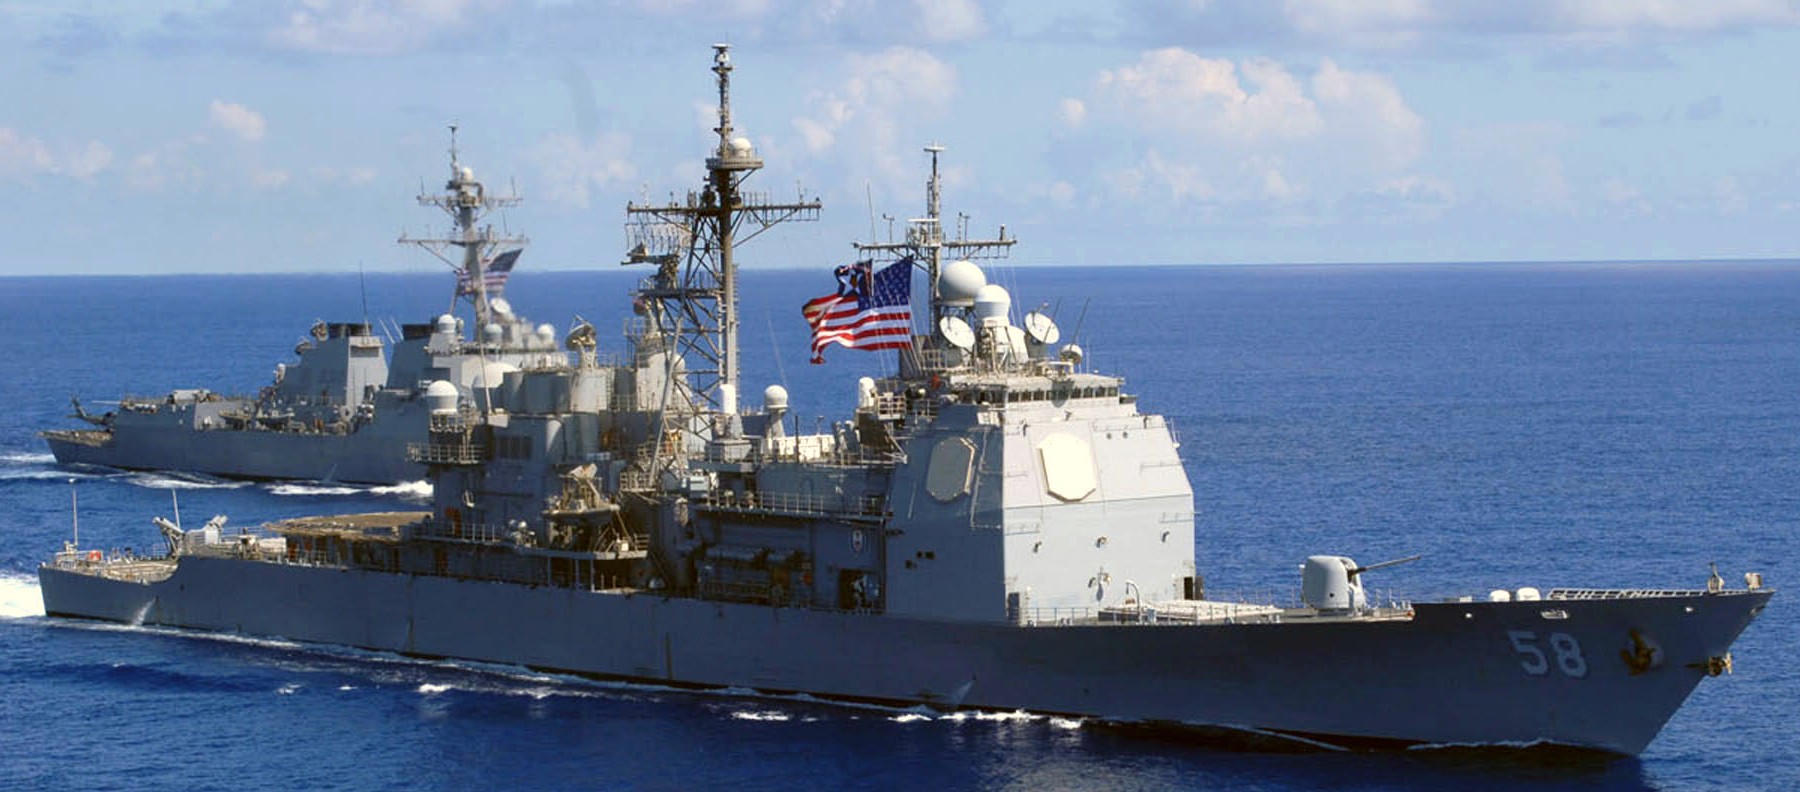 cg-58 uss philippine sea ticonderoga class guided missile cruiser aegis us navy 29